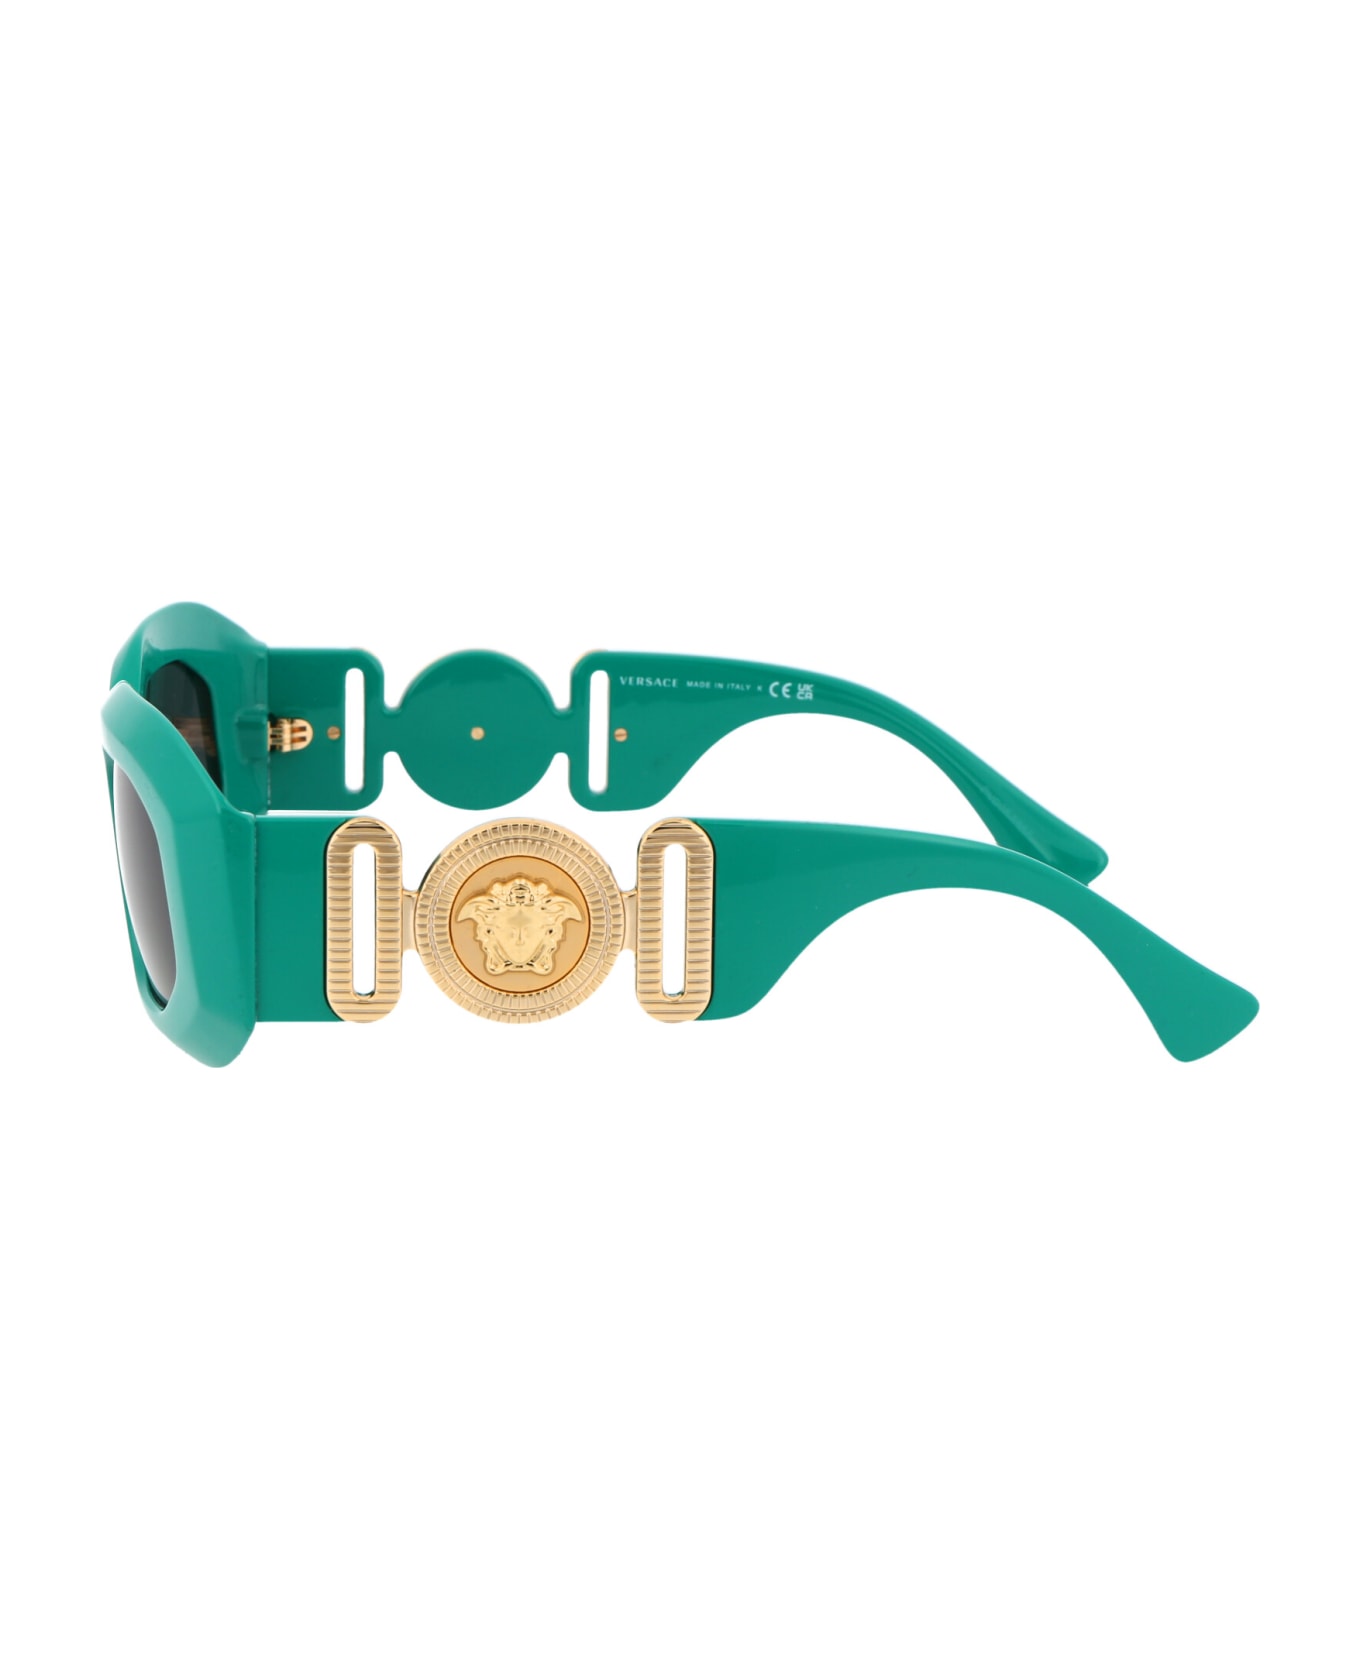 Versace Eyewear 0ve4425u Sunglasses - 536487 Green